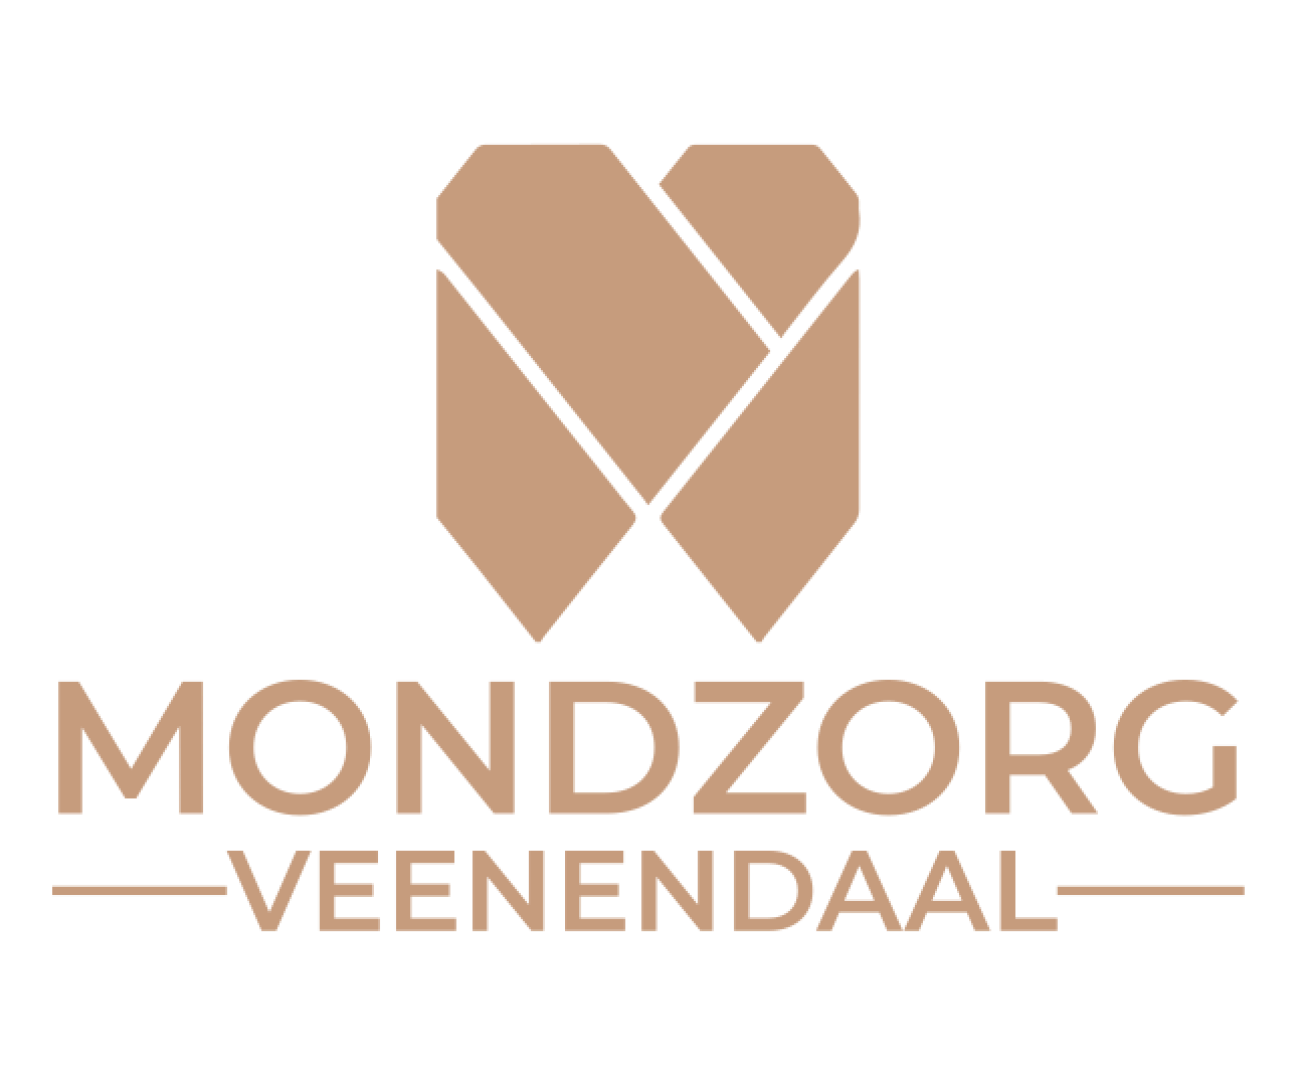 Mondzorg Veenendaal